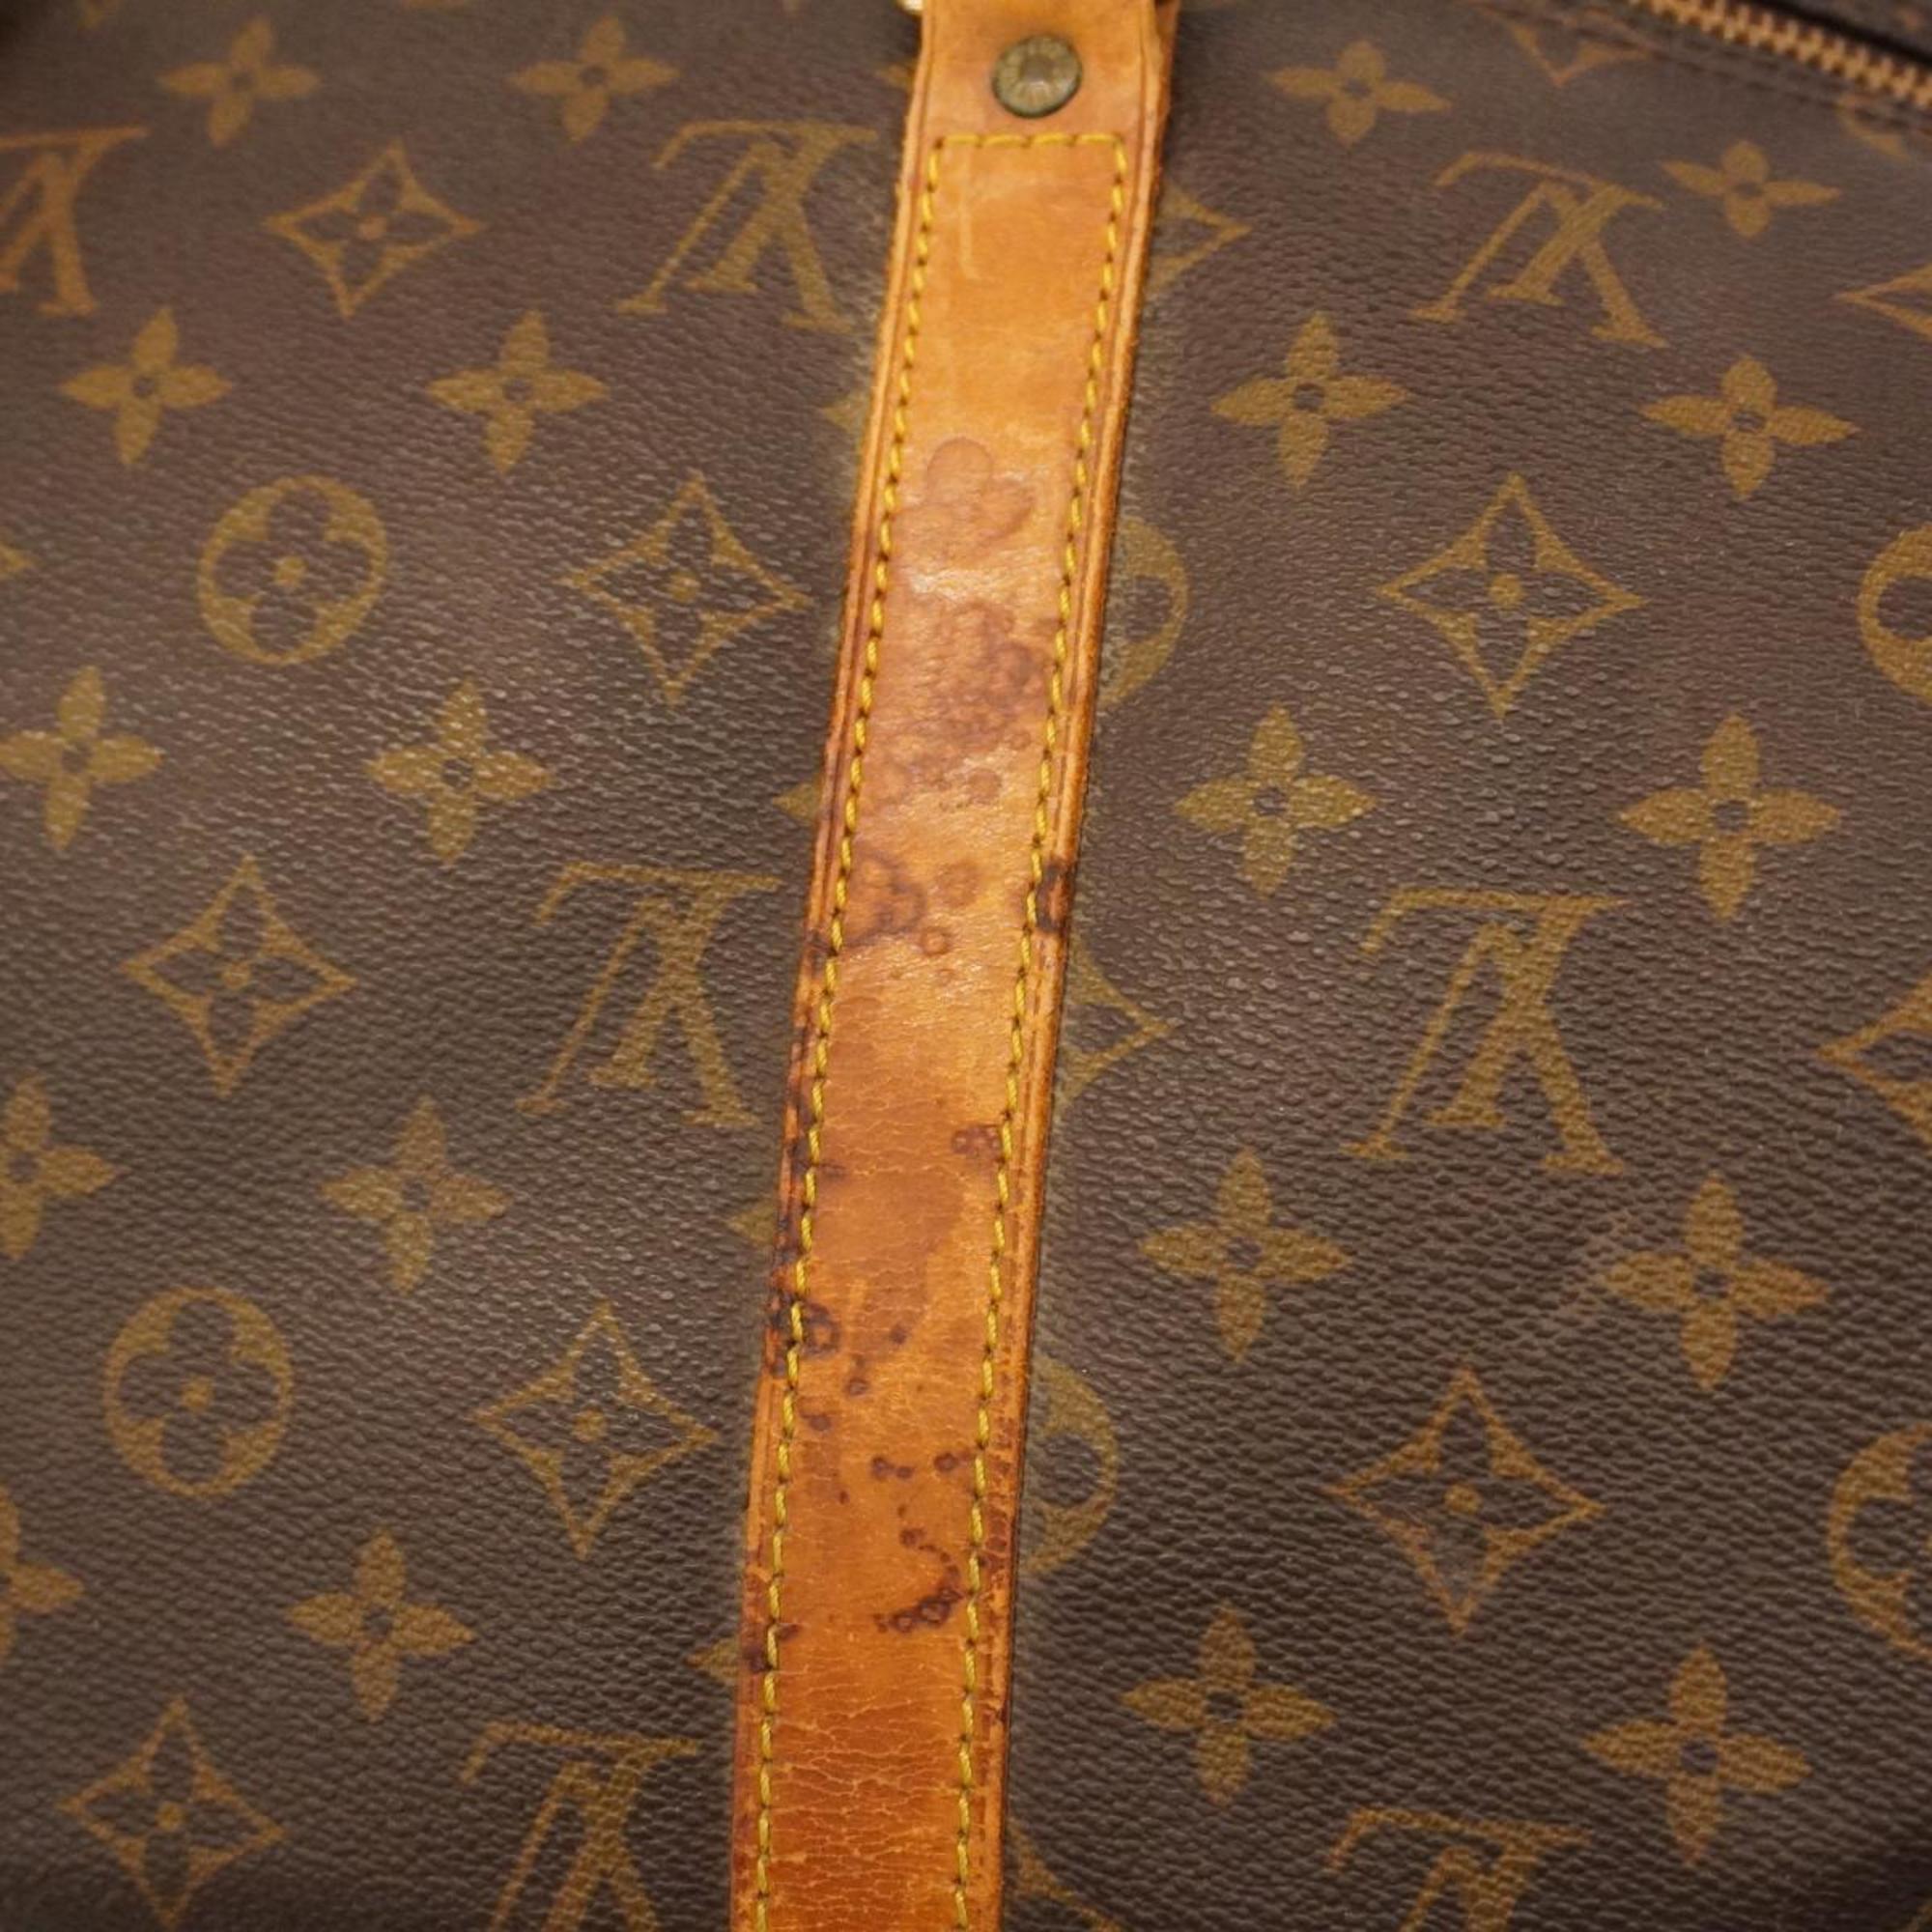 Louis Vuitton Boston Bag Monogram Keepall Bandouliere 50 M41416 Brown Men's Women's